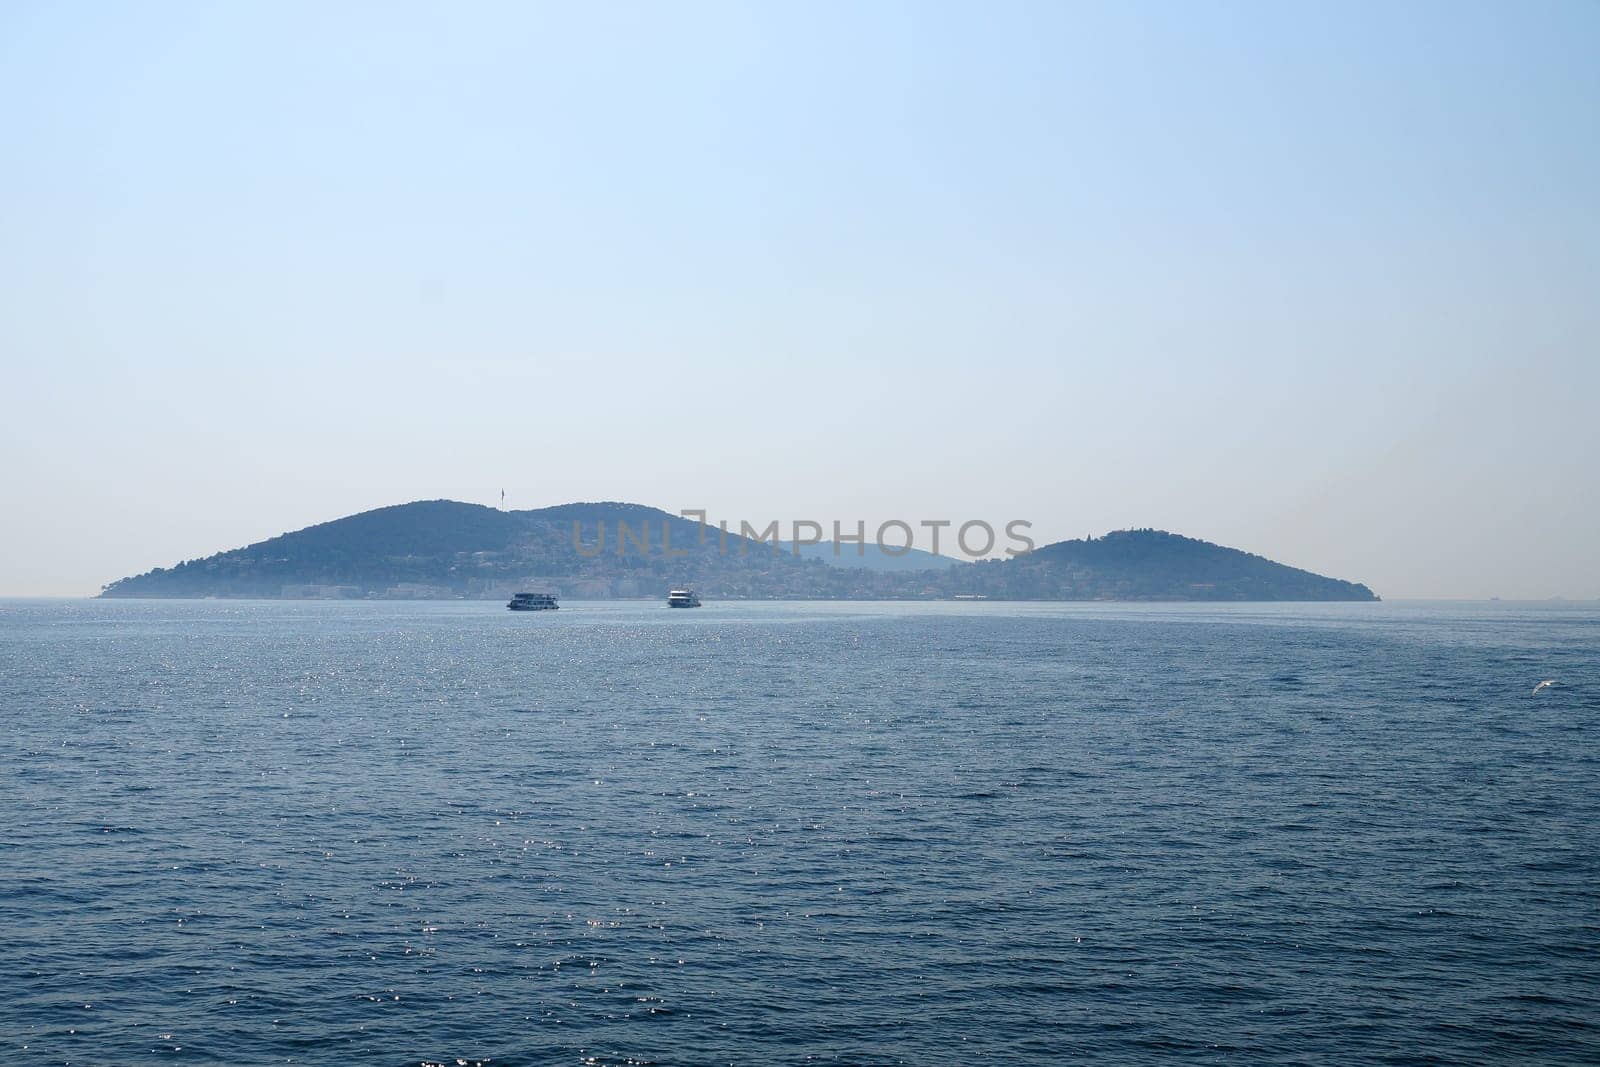 Princes' Islands in the Sea of Marmara, sea panorama by Annado